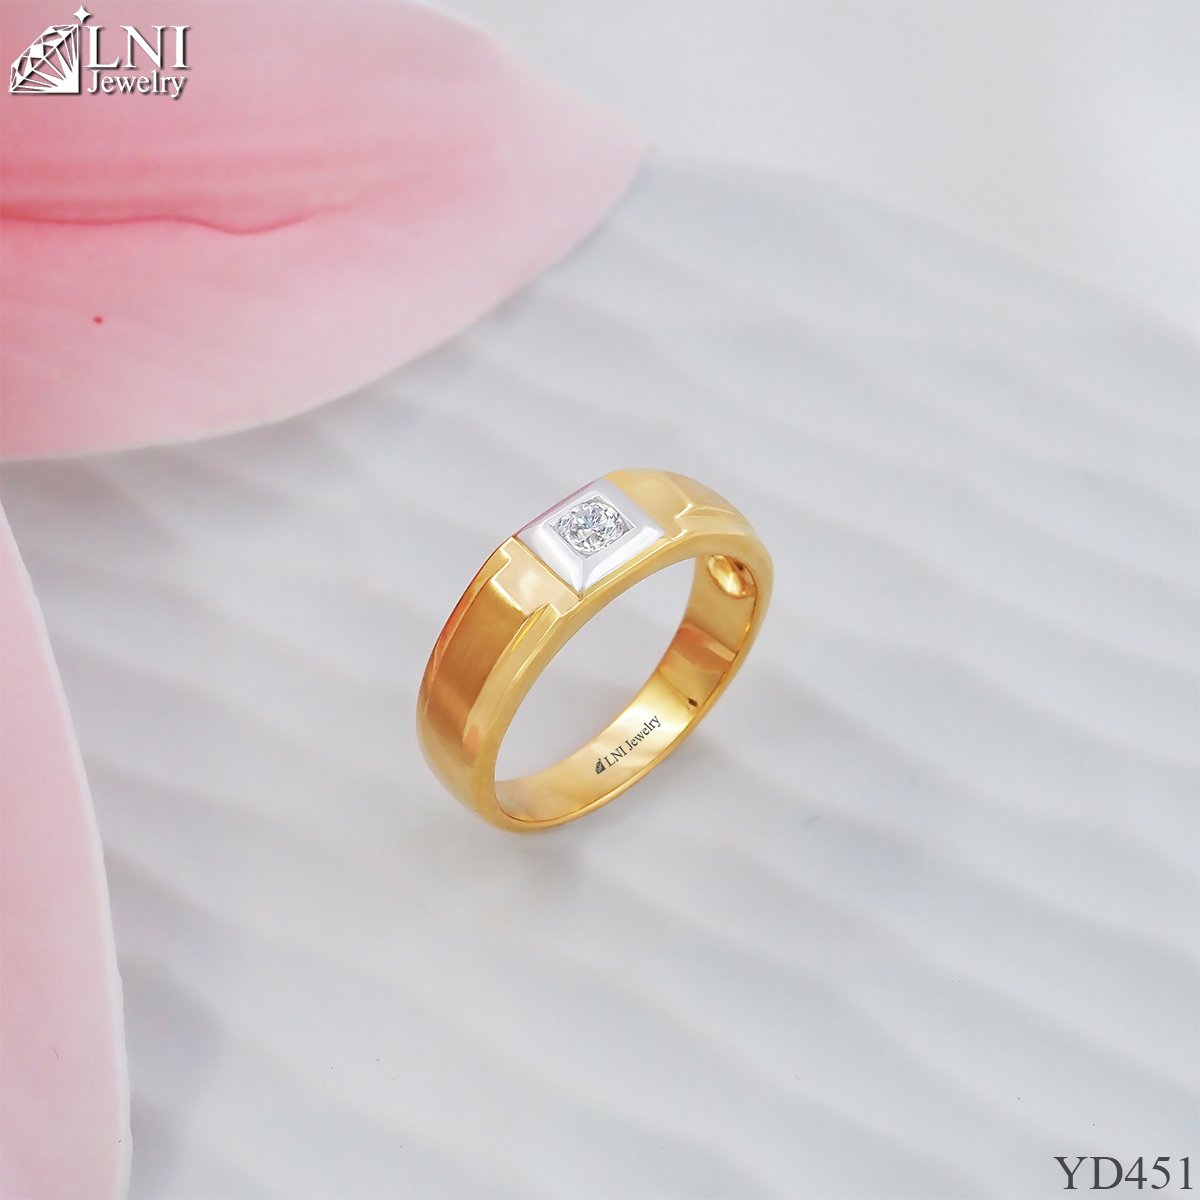 YD451 Single Diamond Ring